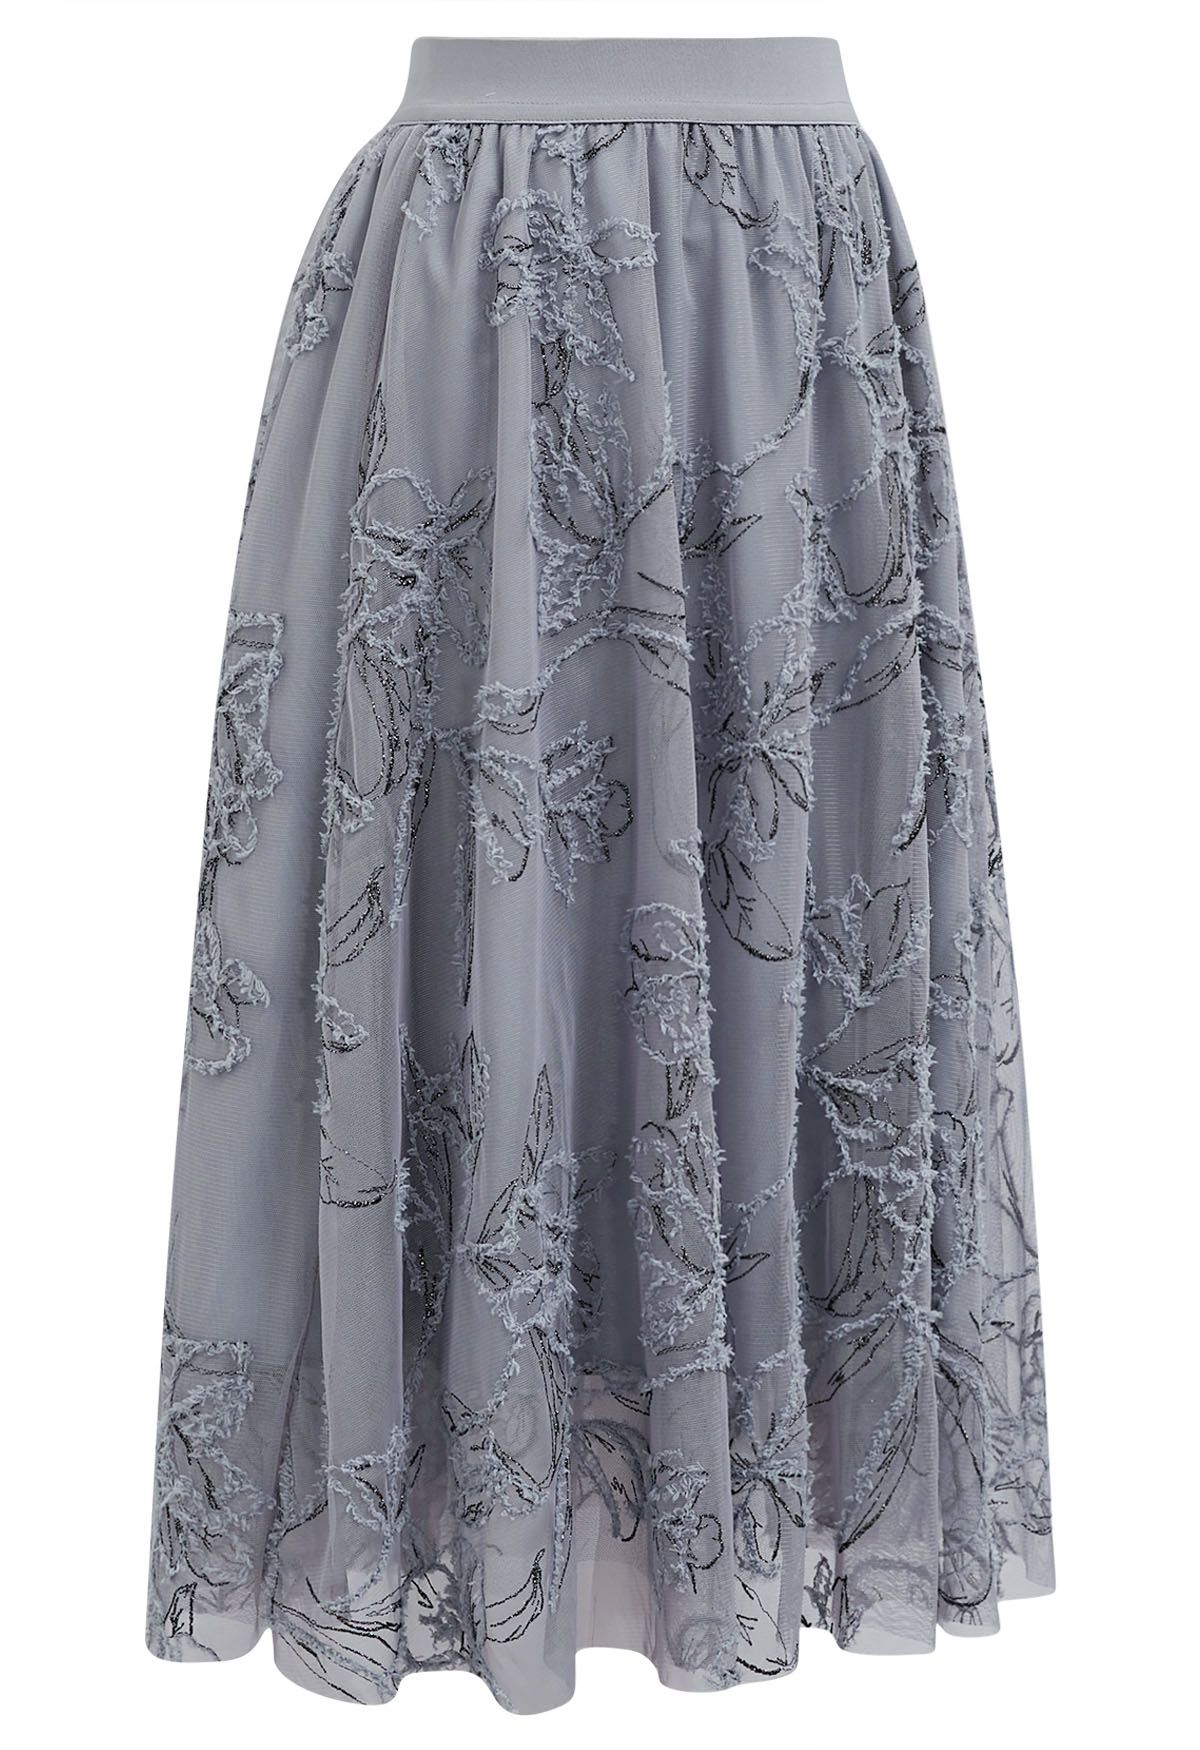 Metallic Thread Fuzzy Floral Mesh Midi Skirt in Grey